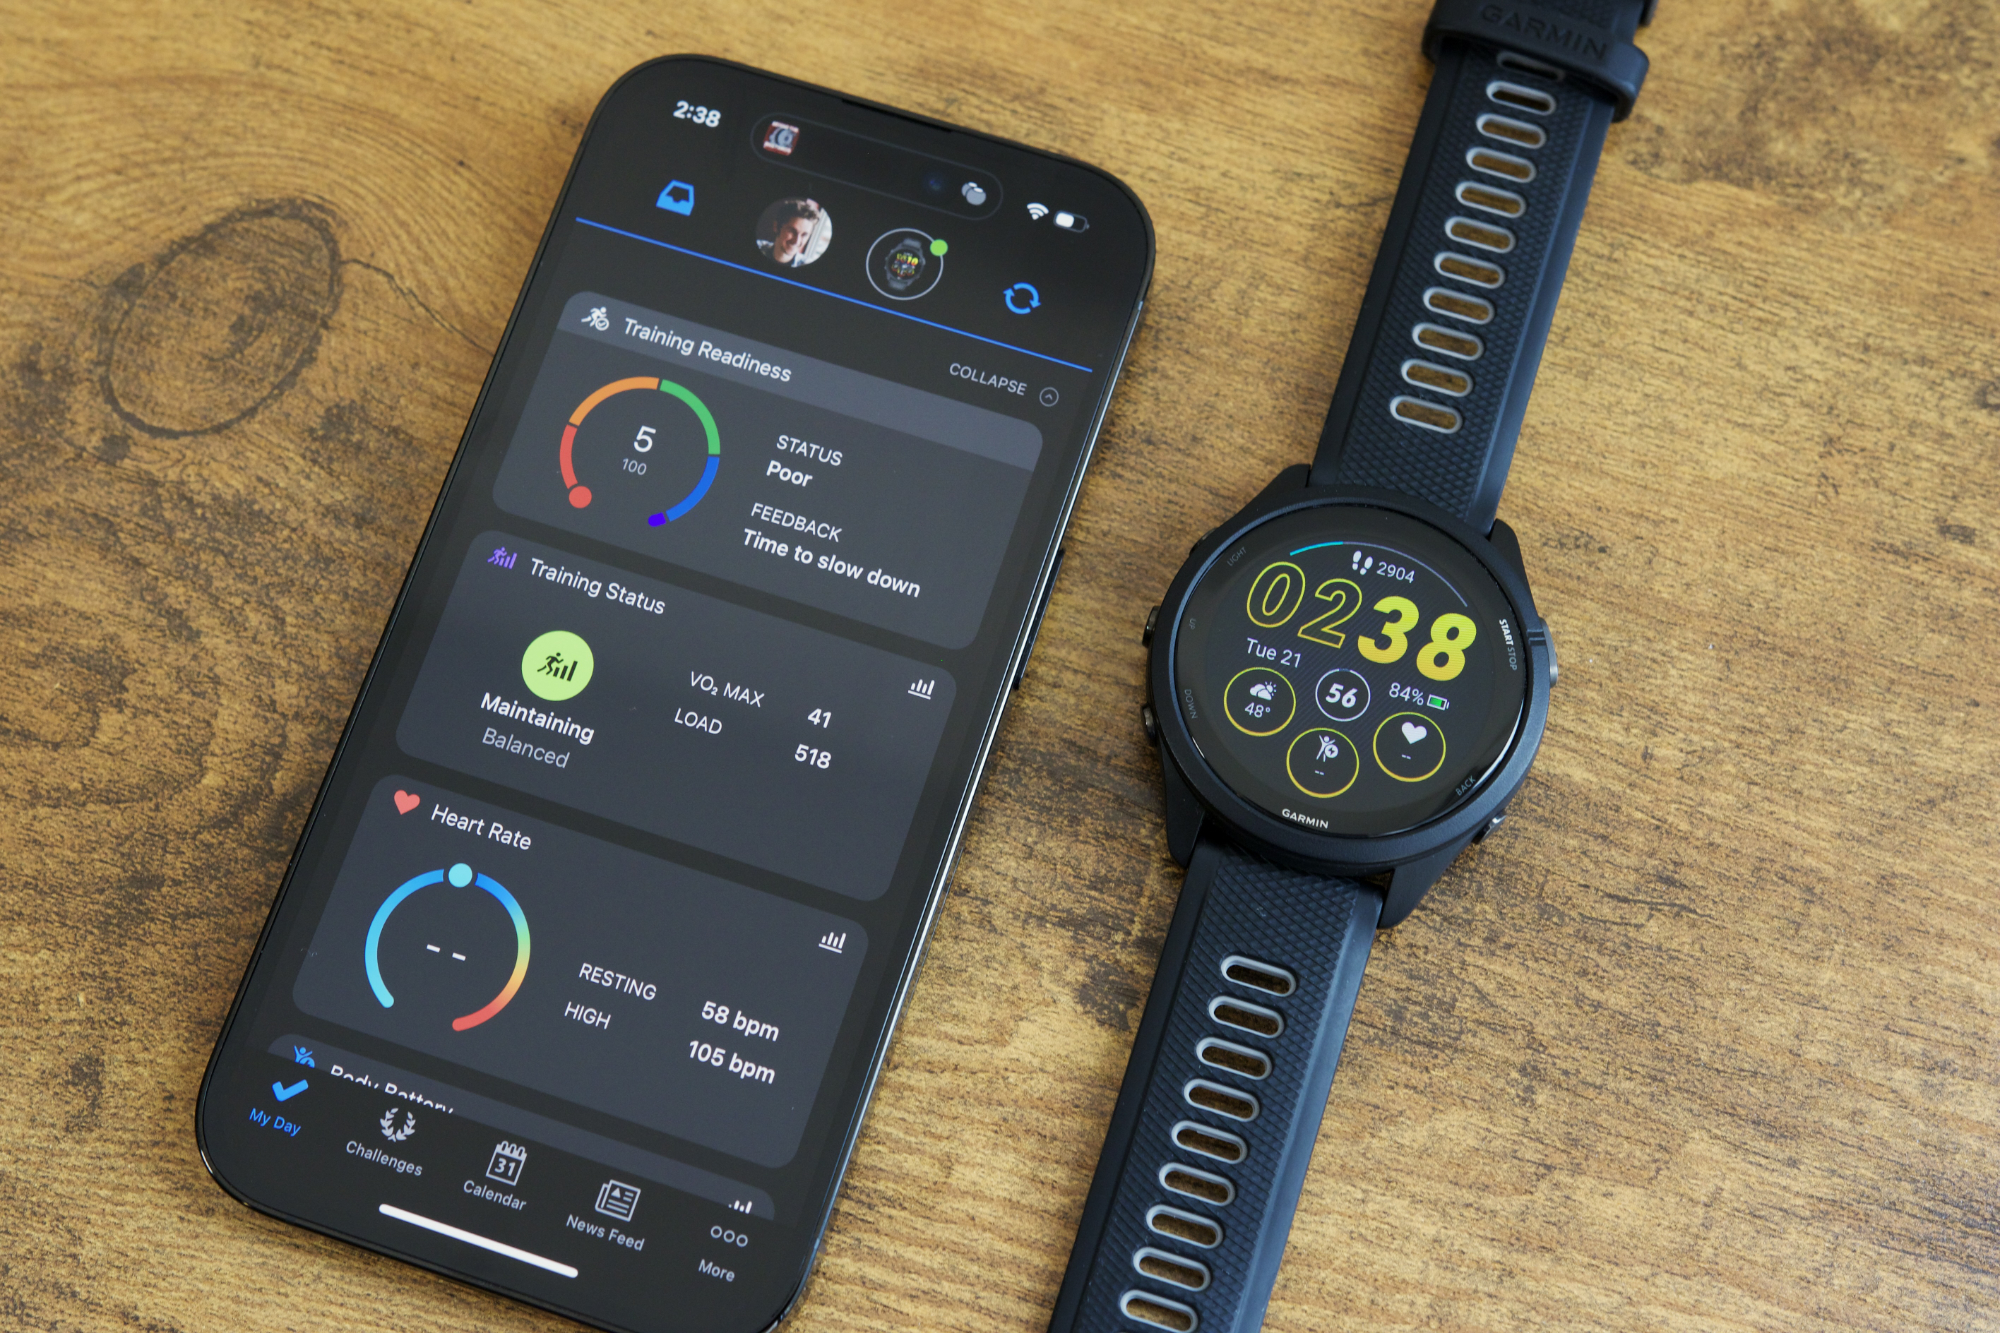 Garmin Forerunner 265 smartwatch could launch soon following FCC filings -   News